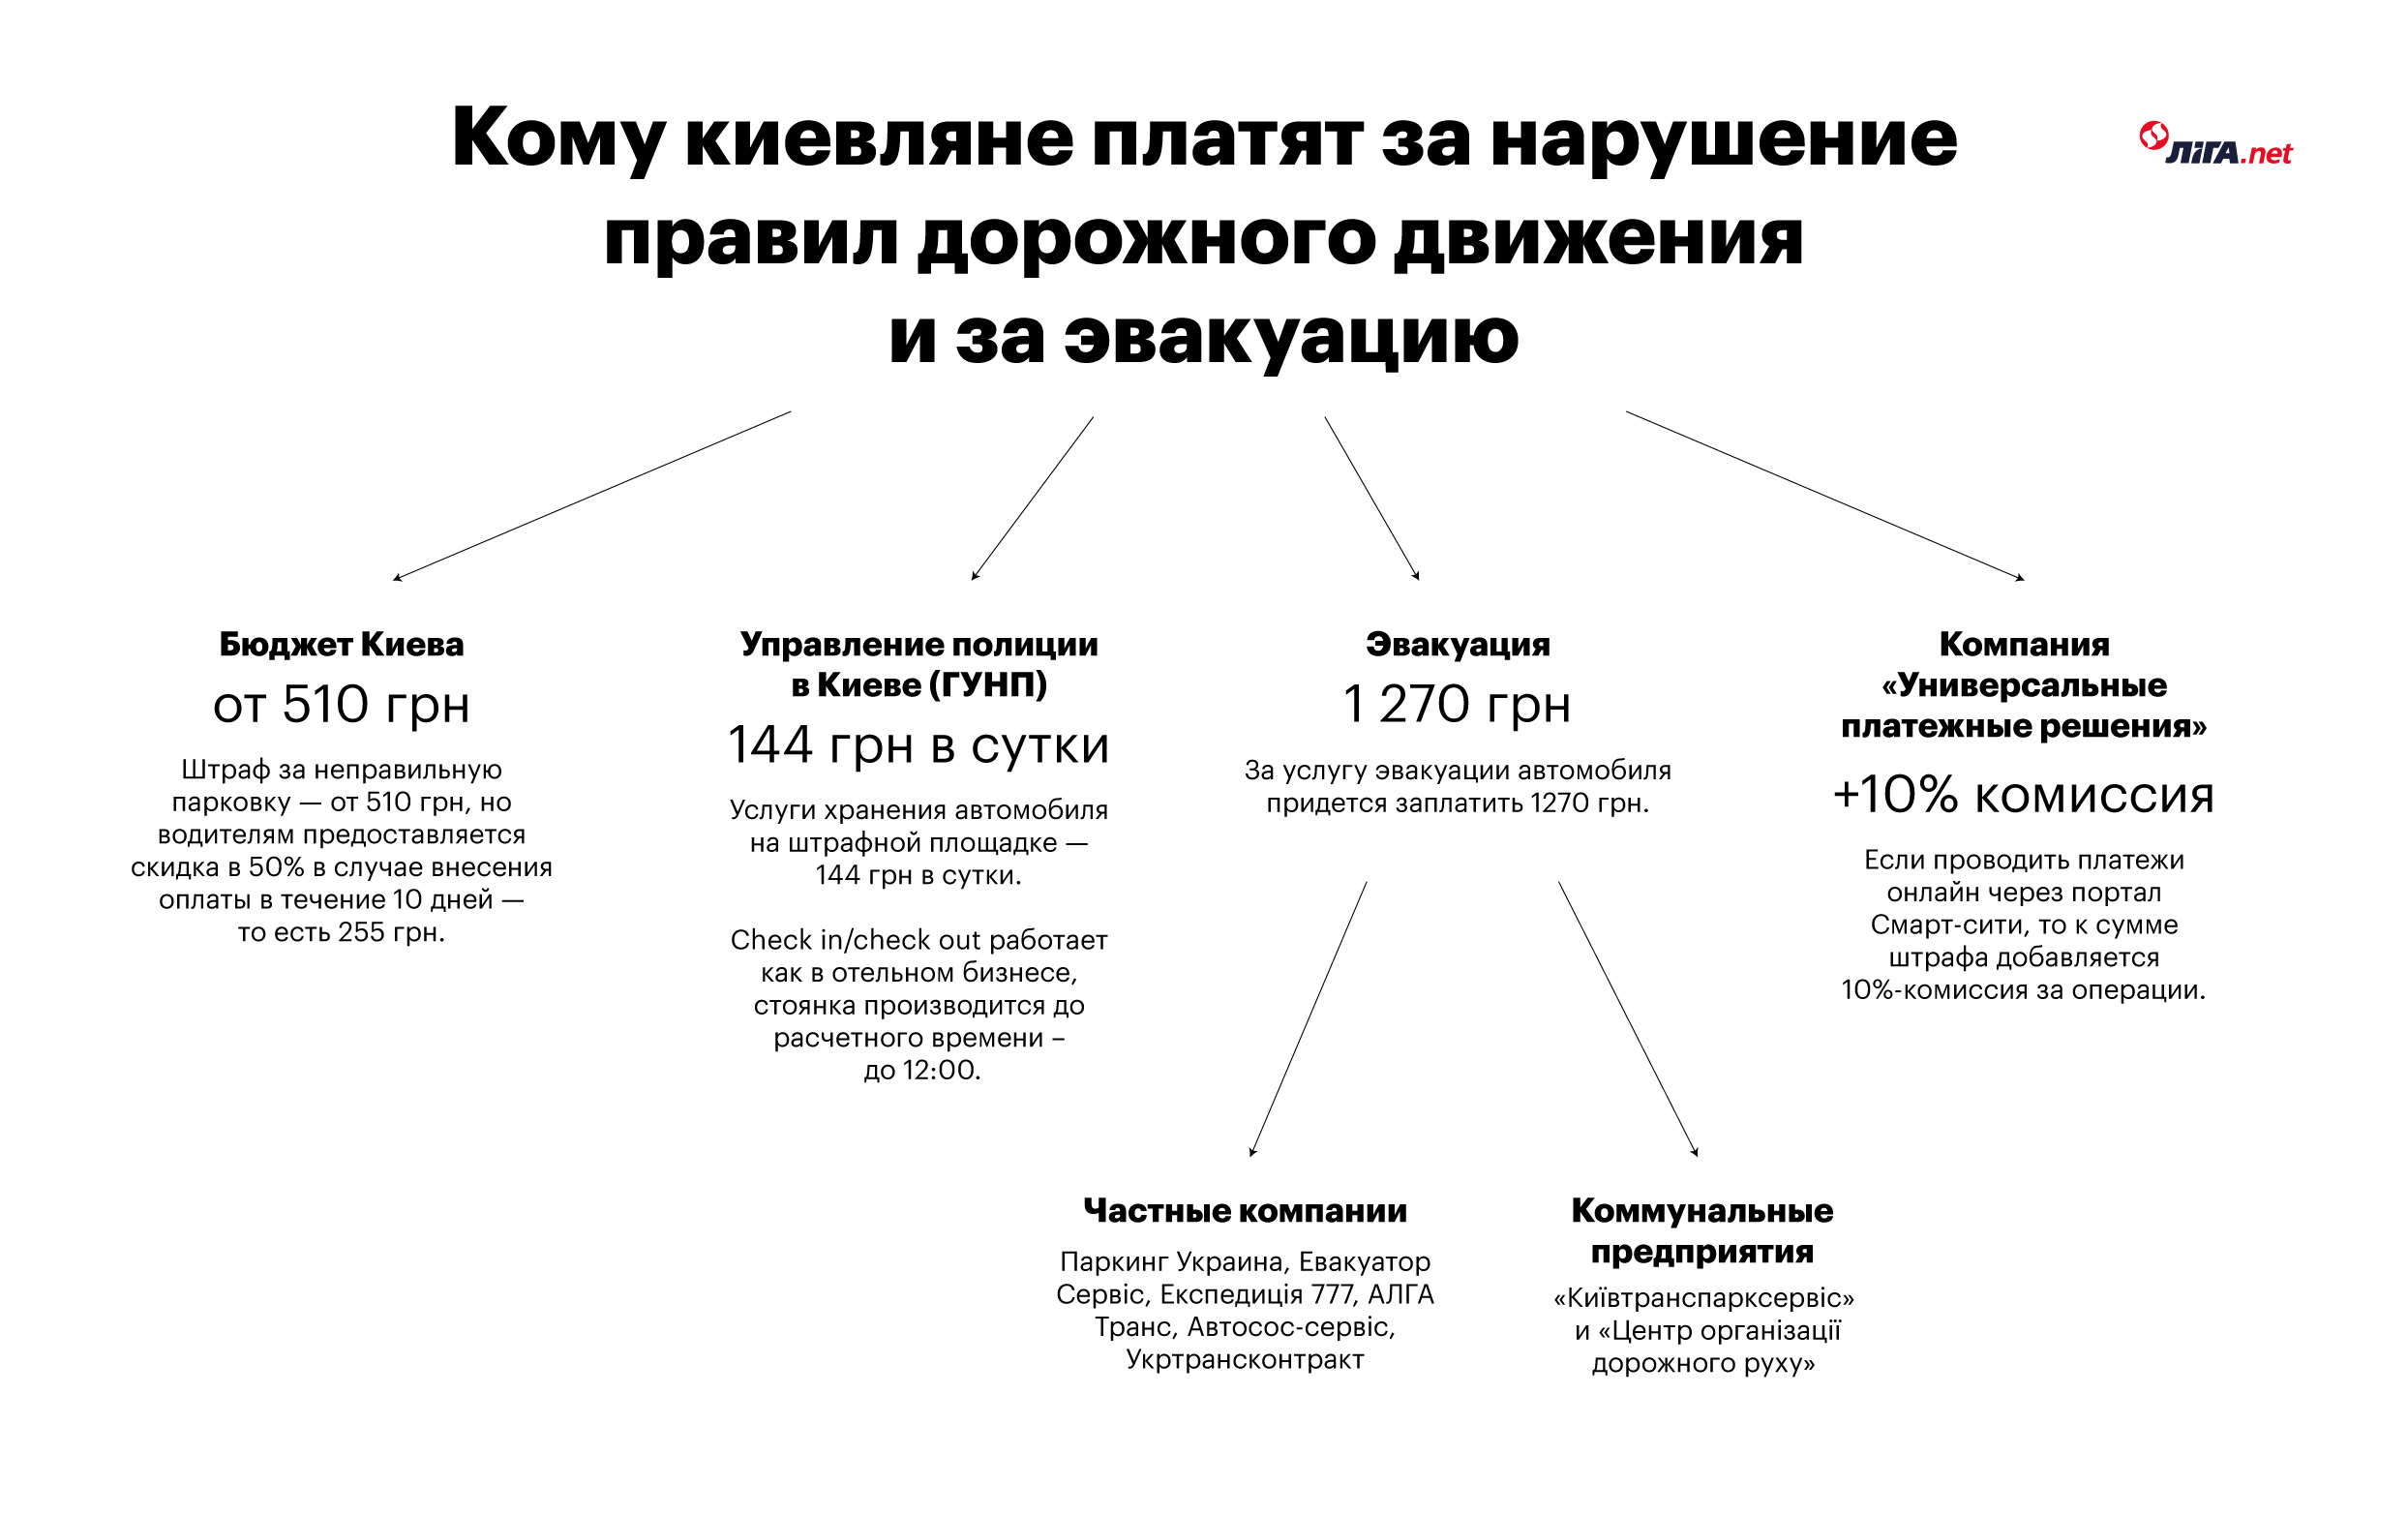 Инфографика LIGA.net